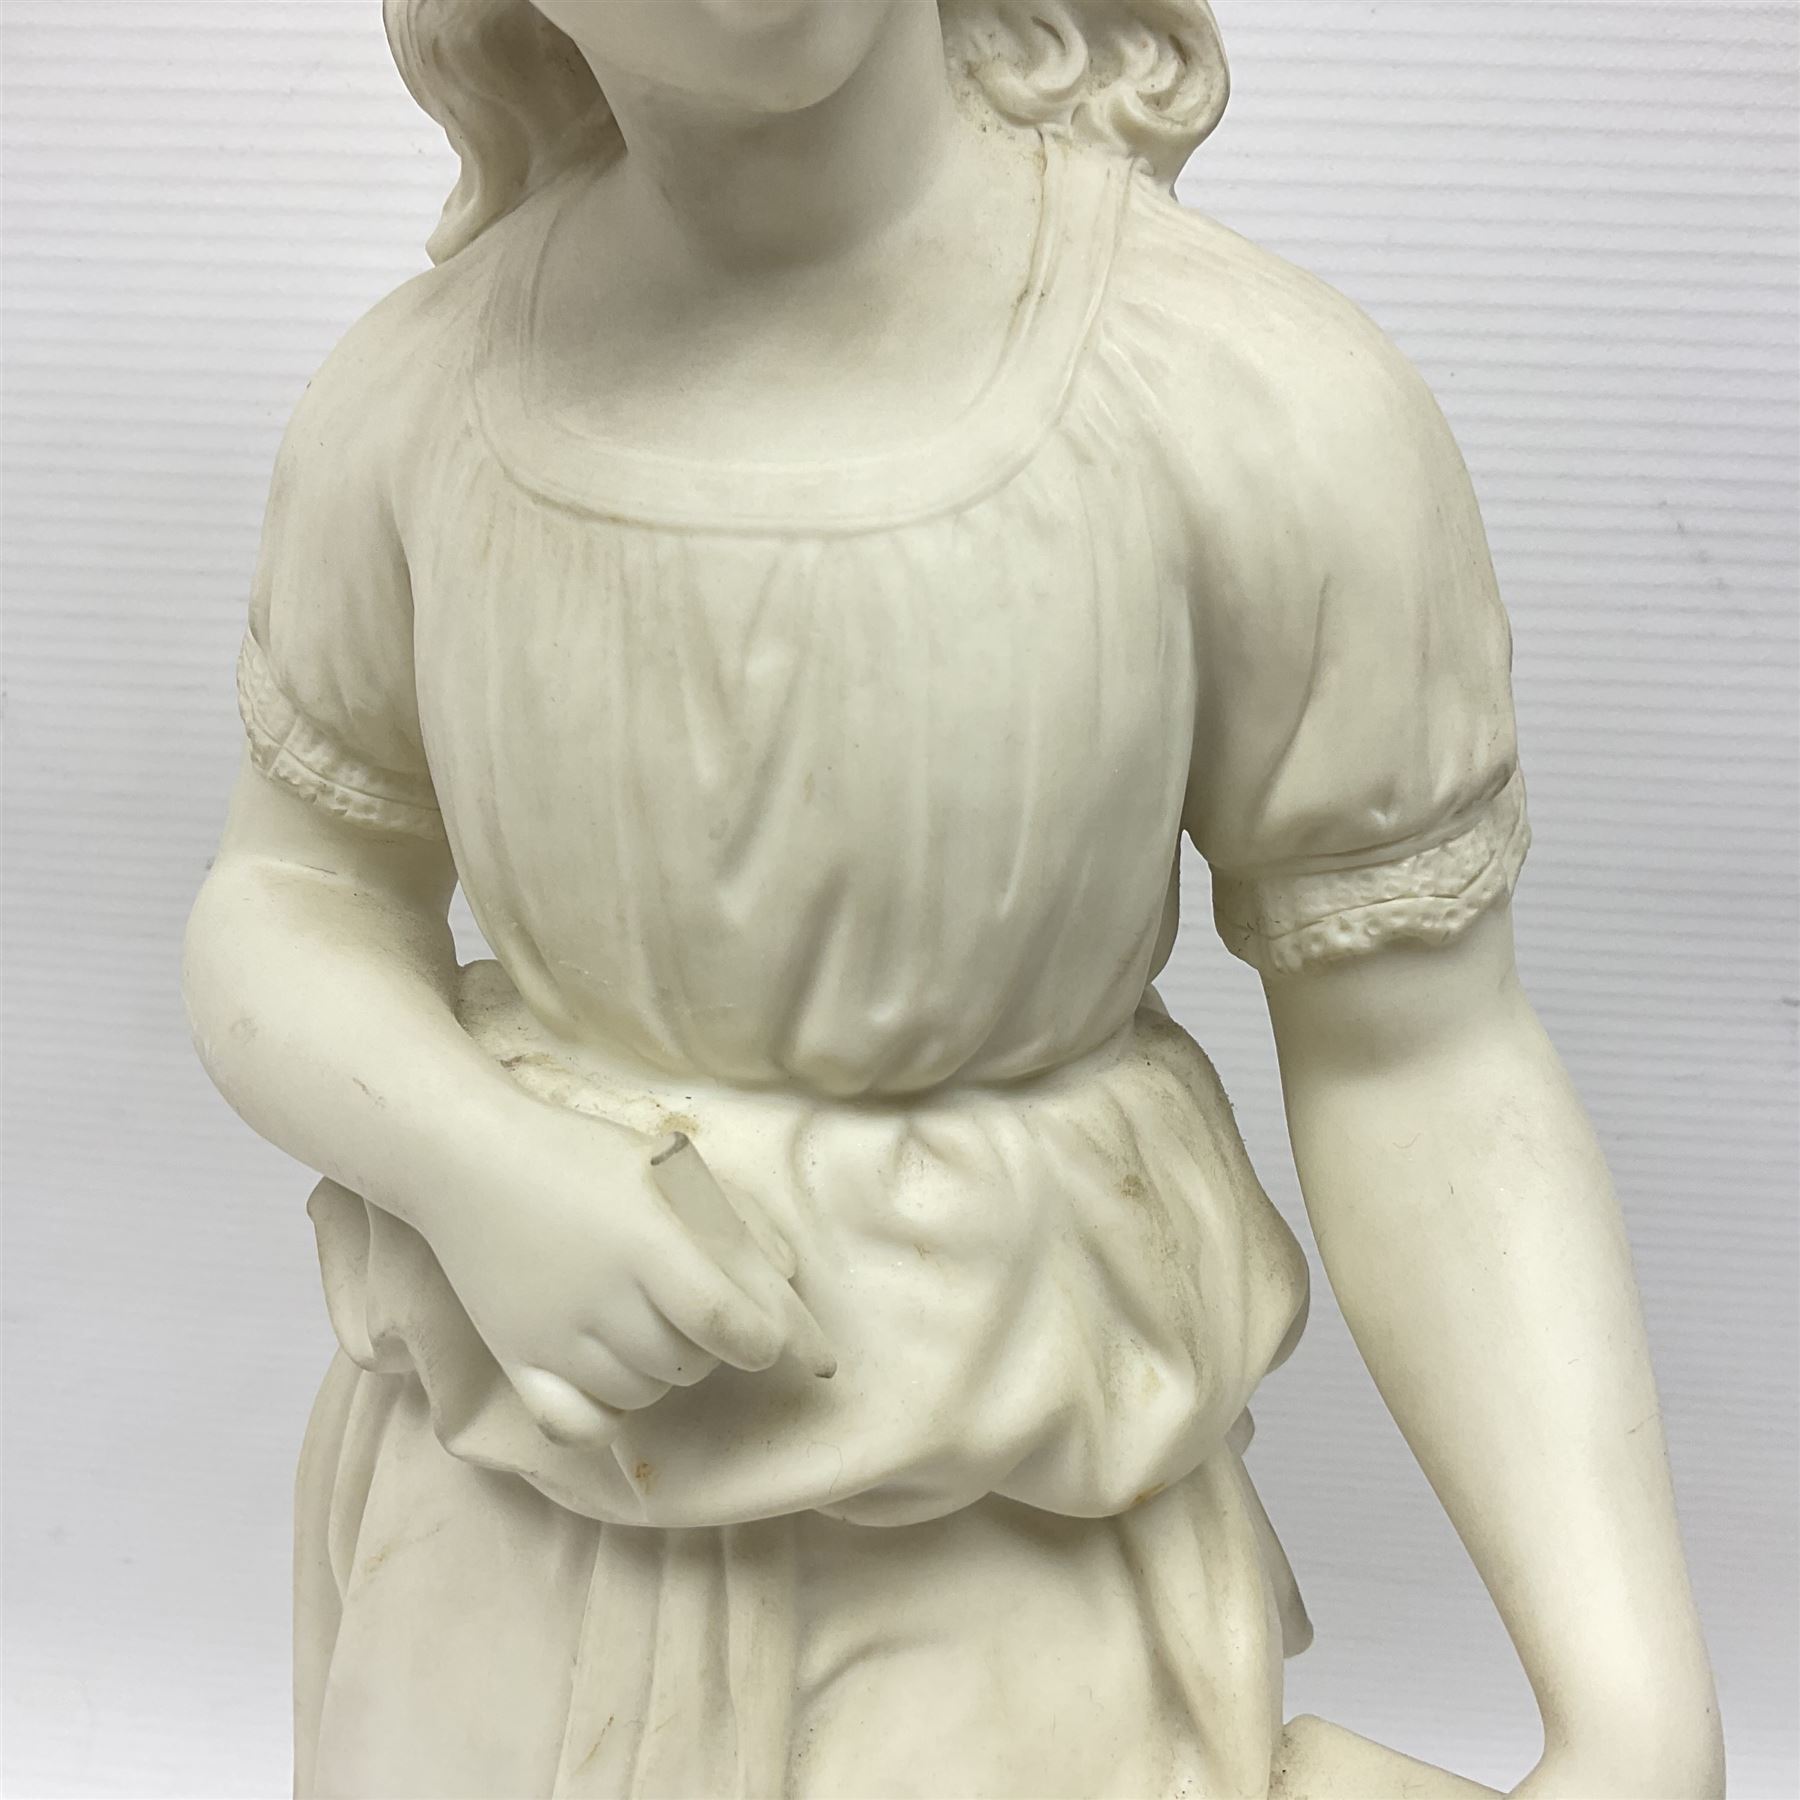 19th century Copeland Parian Ware figure - Image 3 of 16